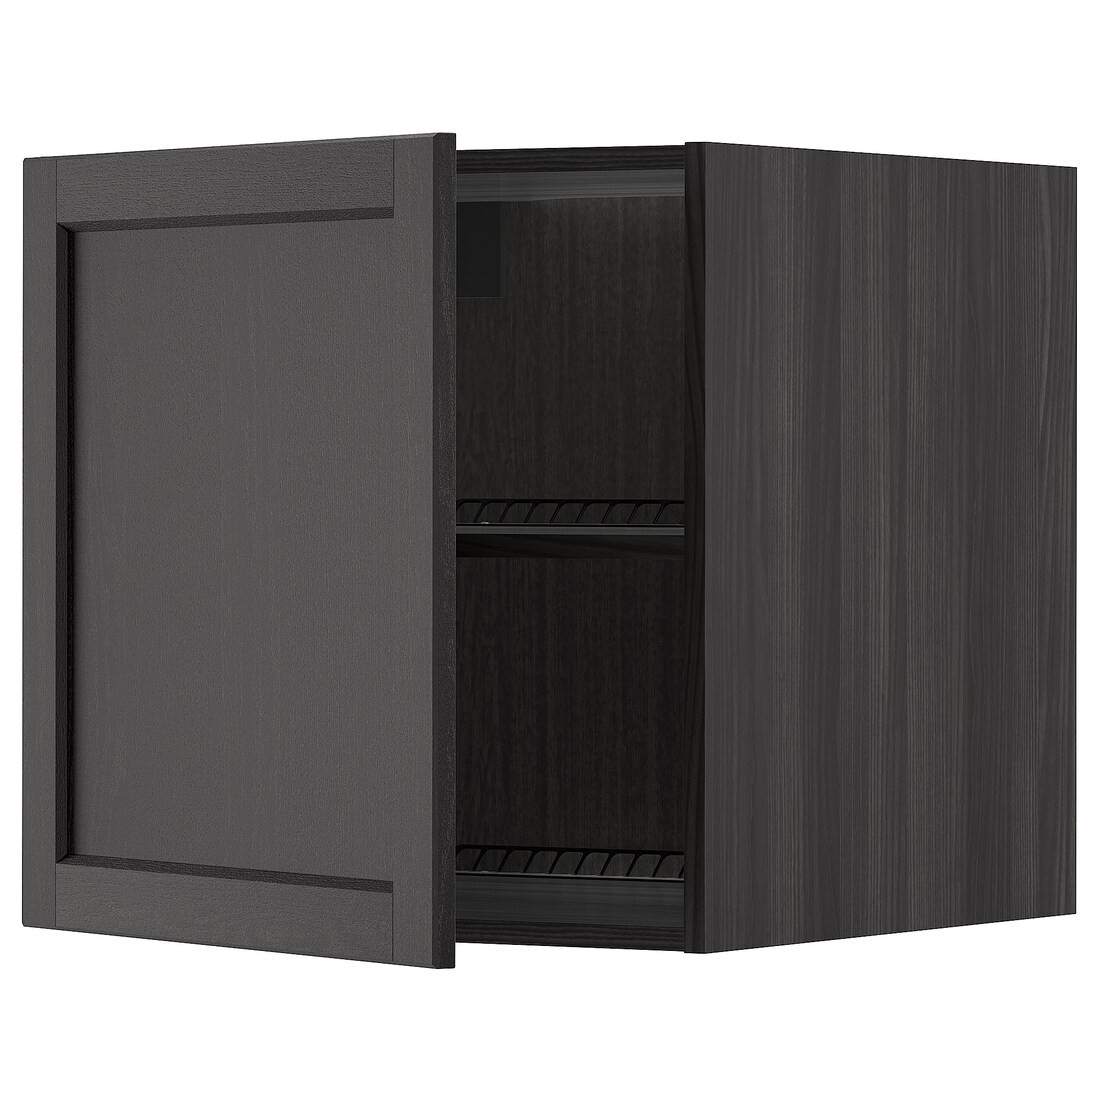 METOD МЕТОД Верхний шкаф для холодильника / морозильника, черный / Lerhyttan черная морилка, 60x60 см